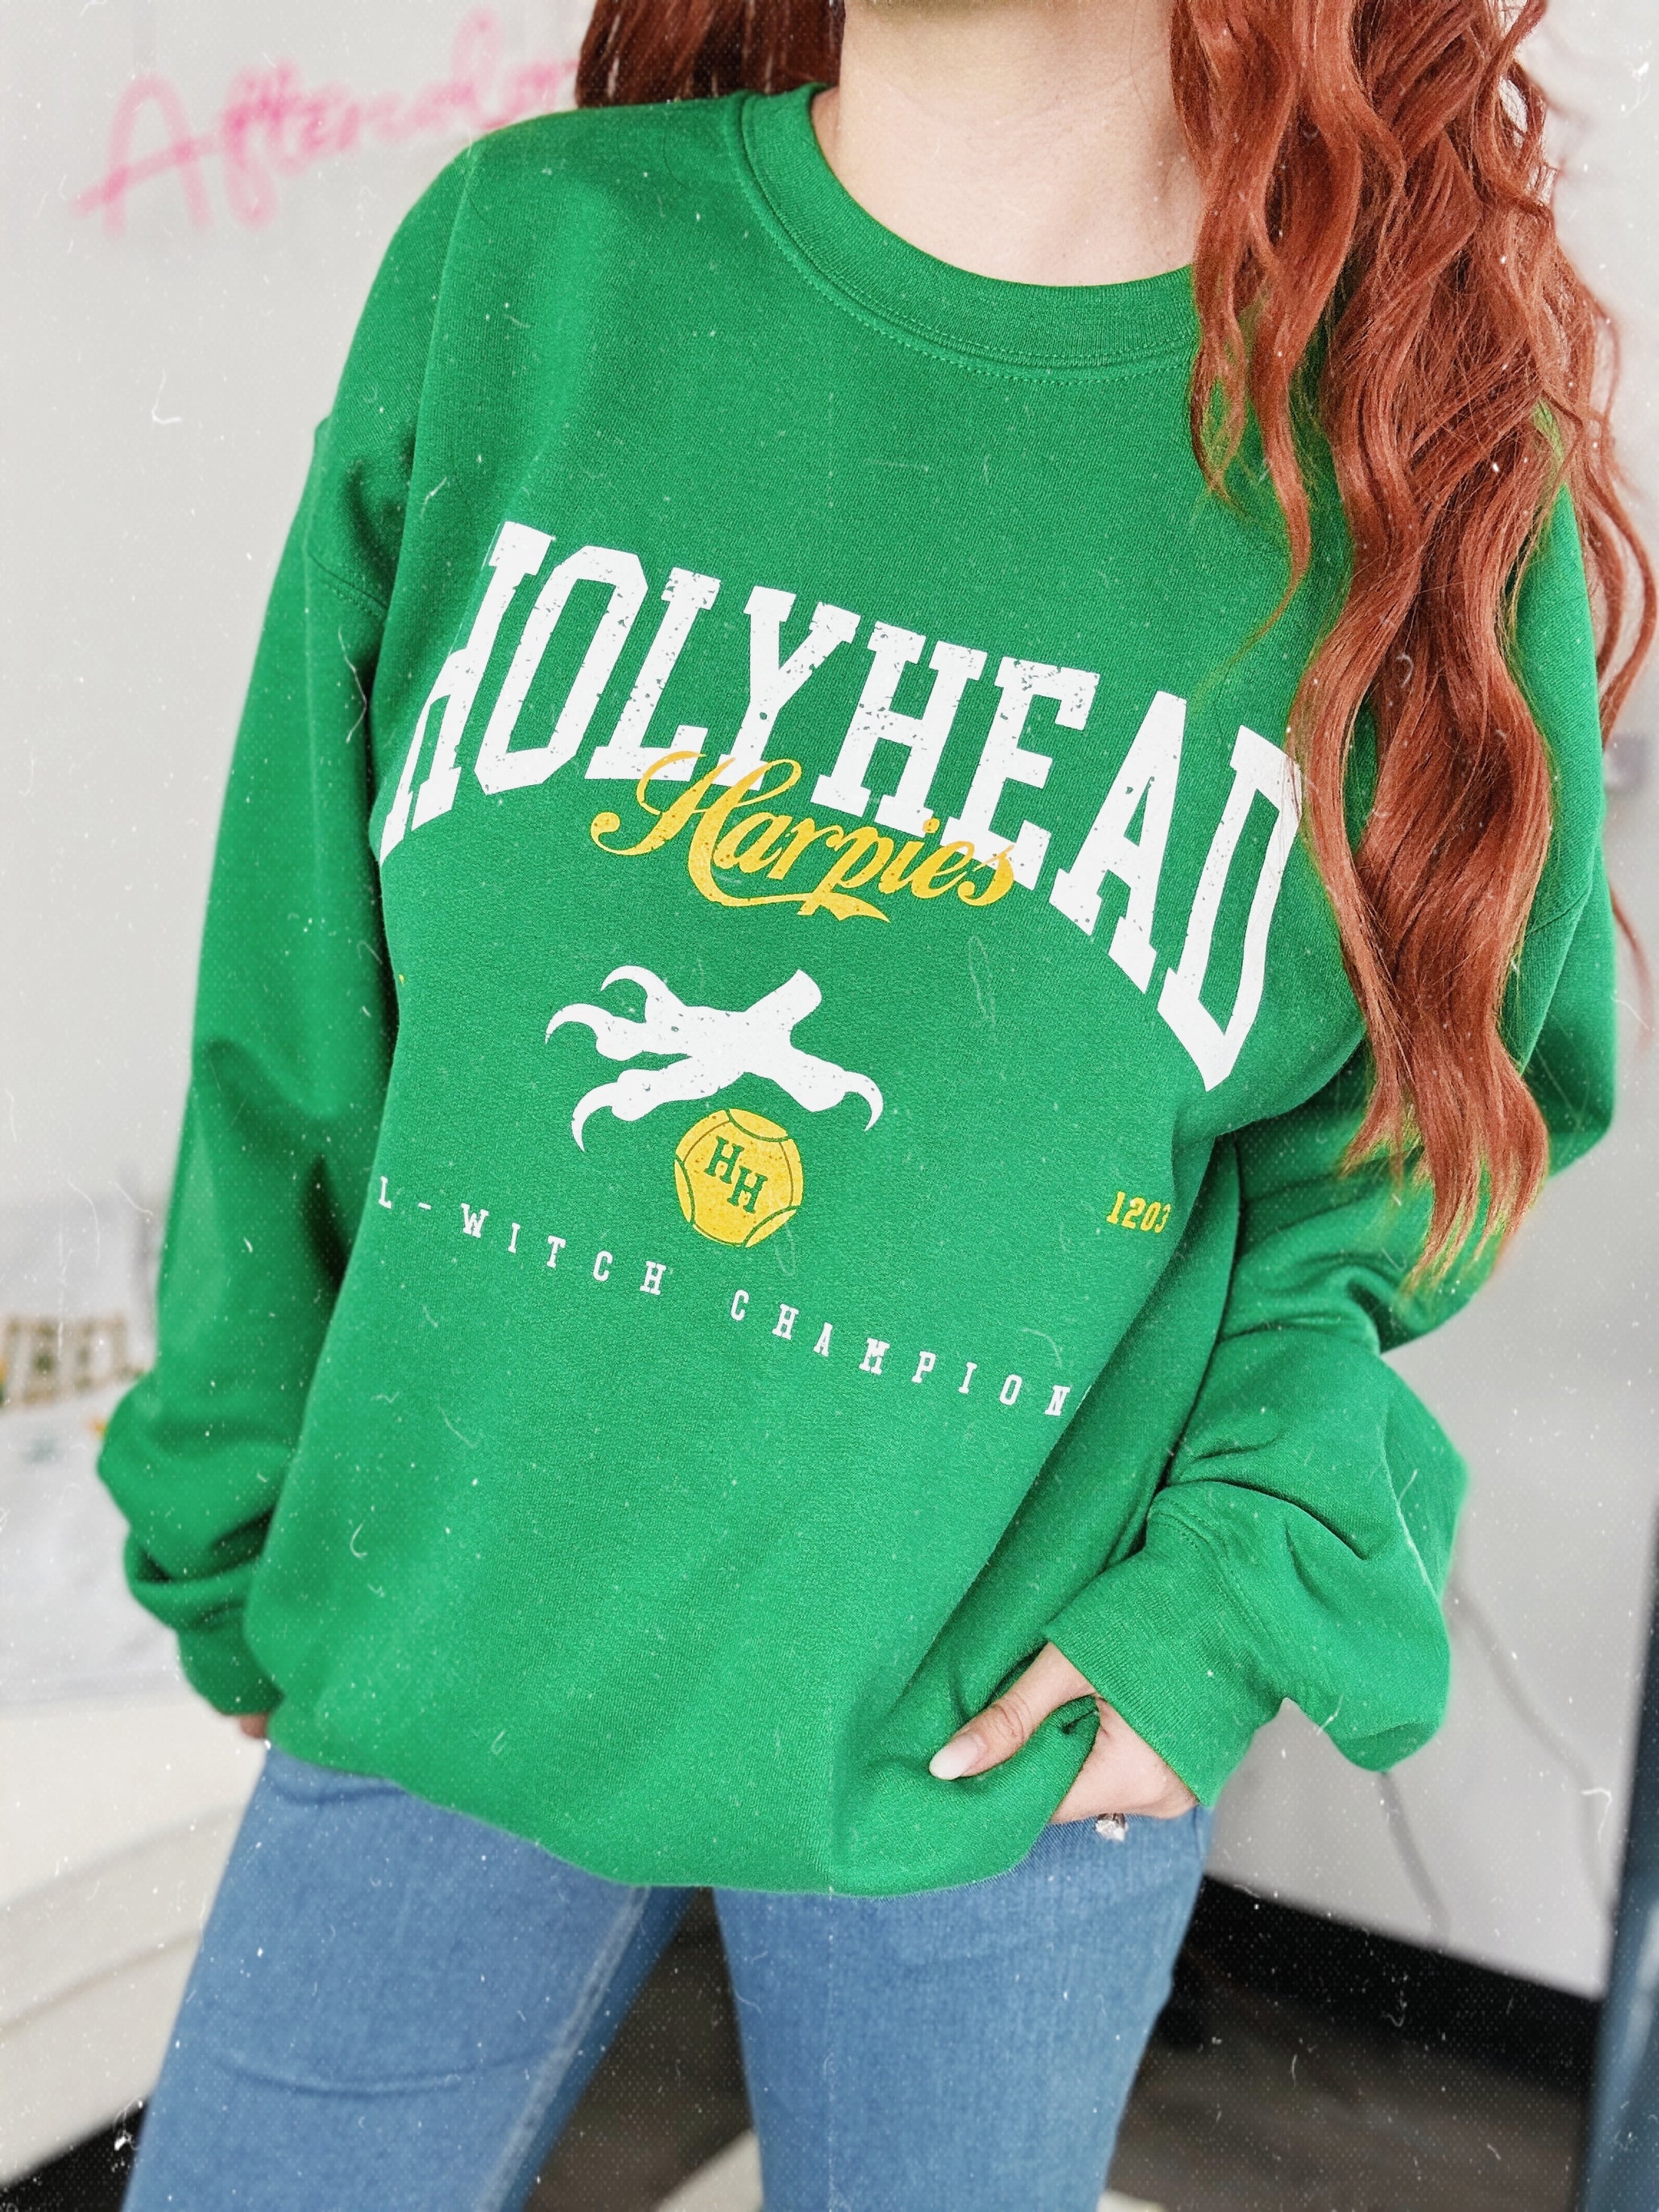 Holyhead Crewneck Sweatshirt